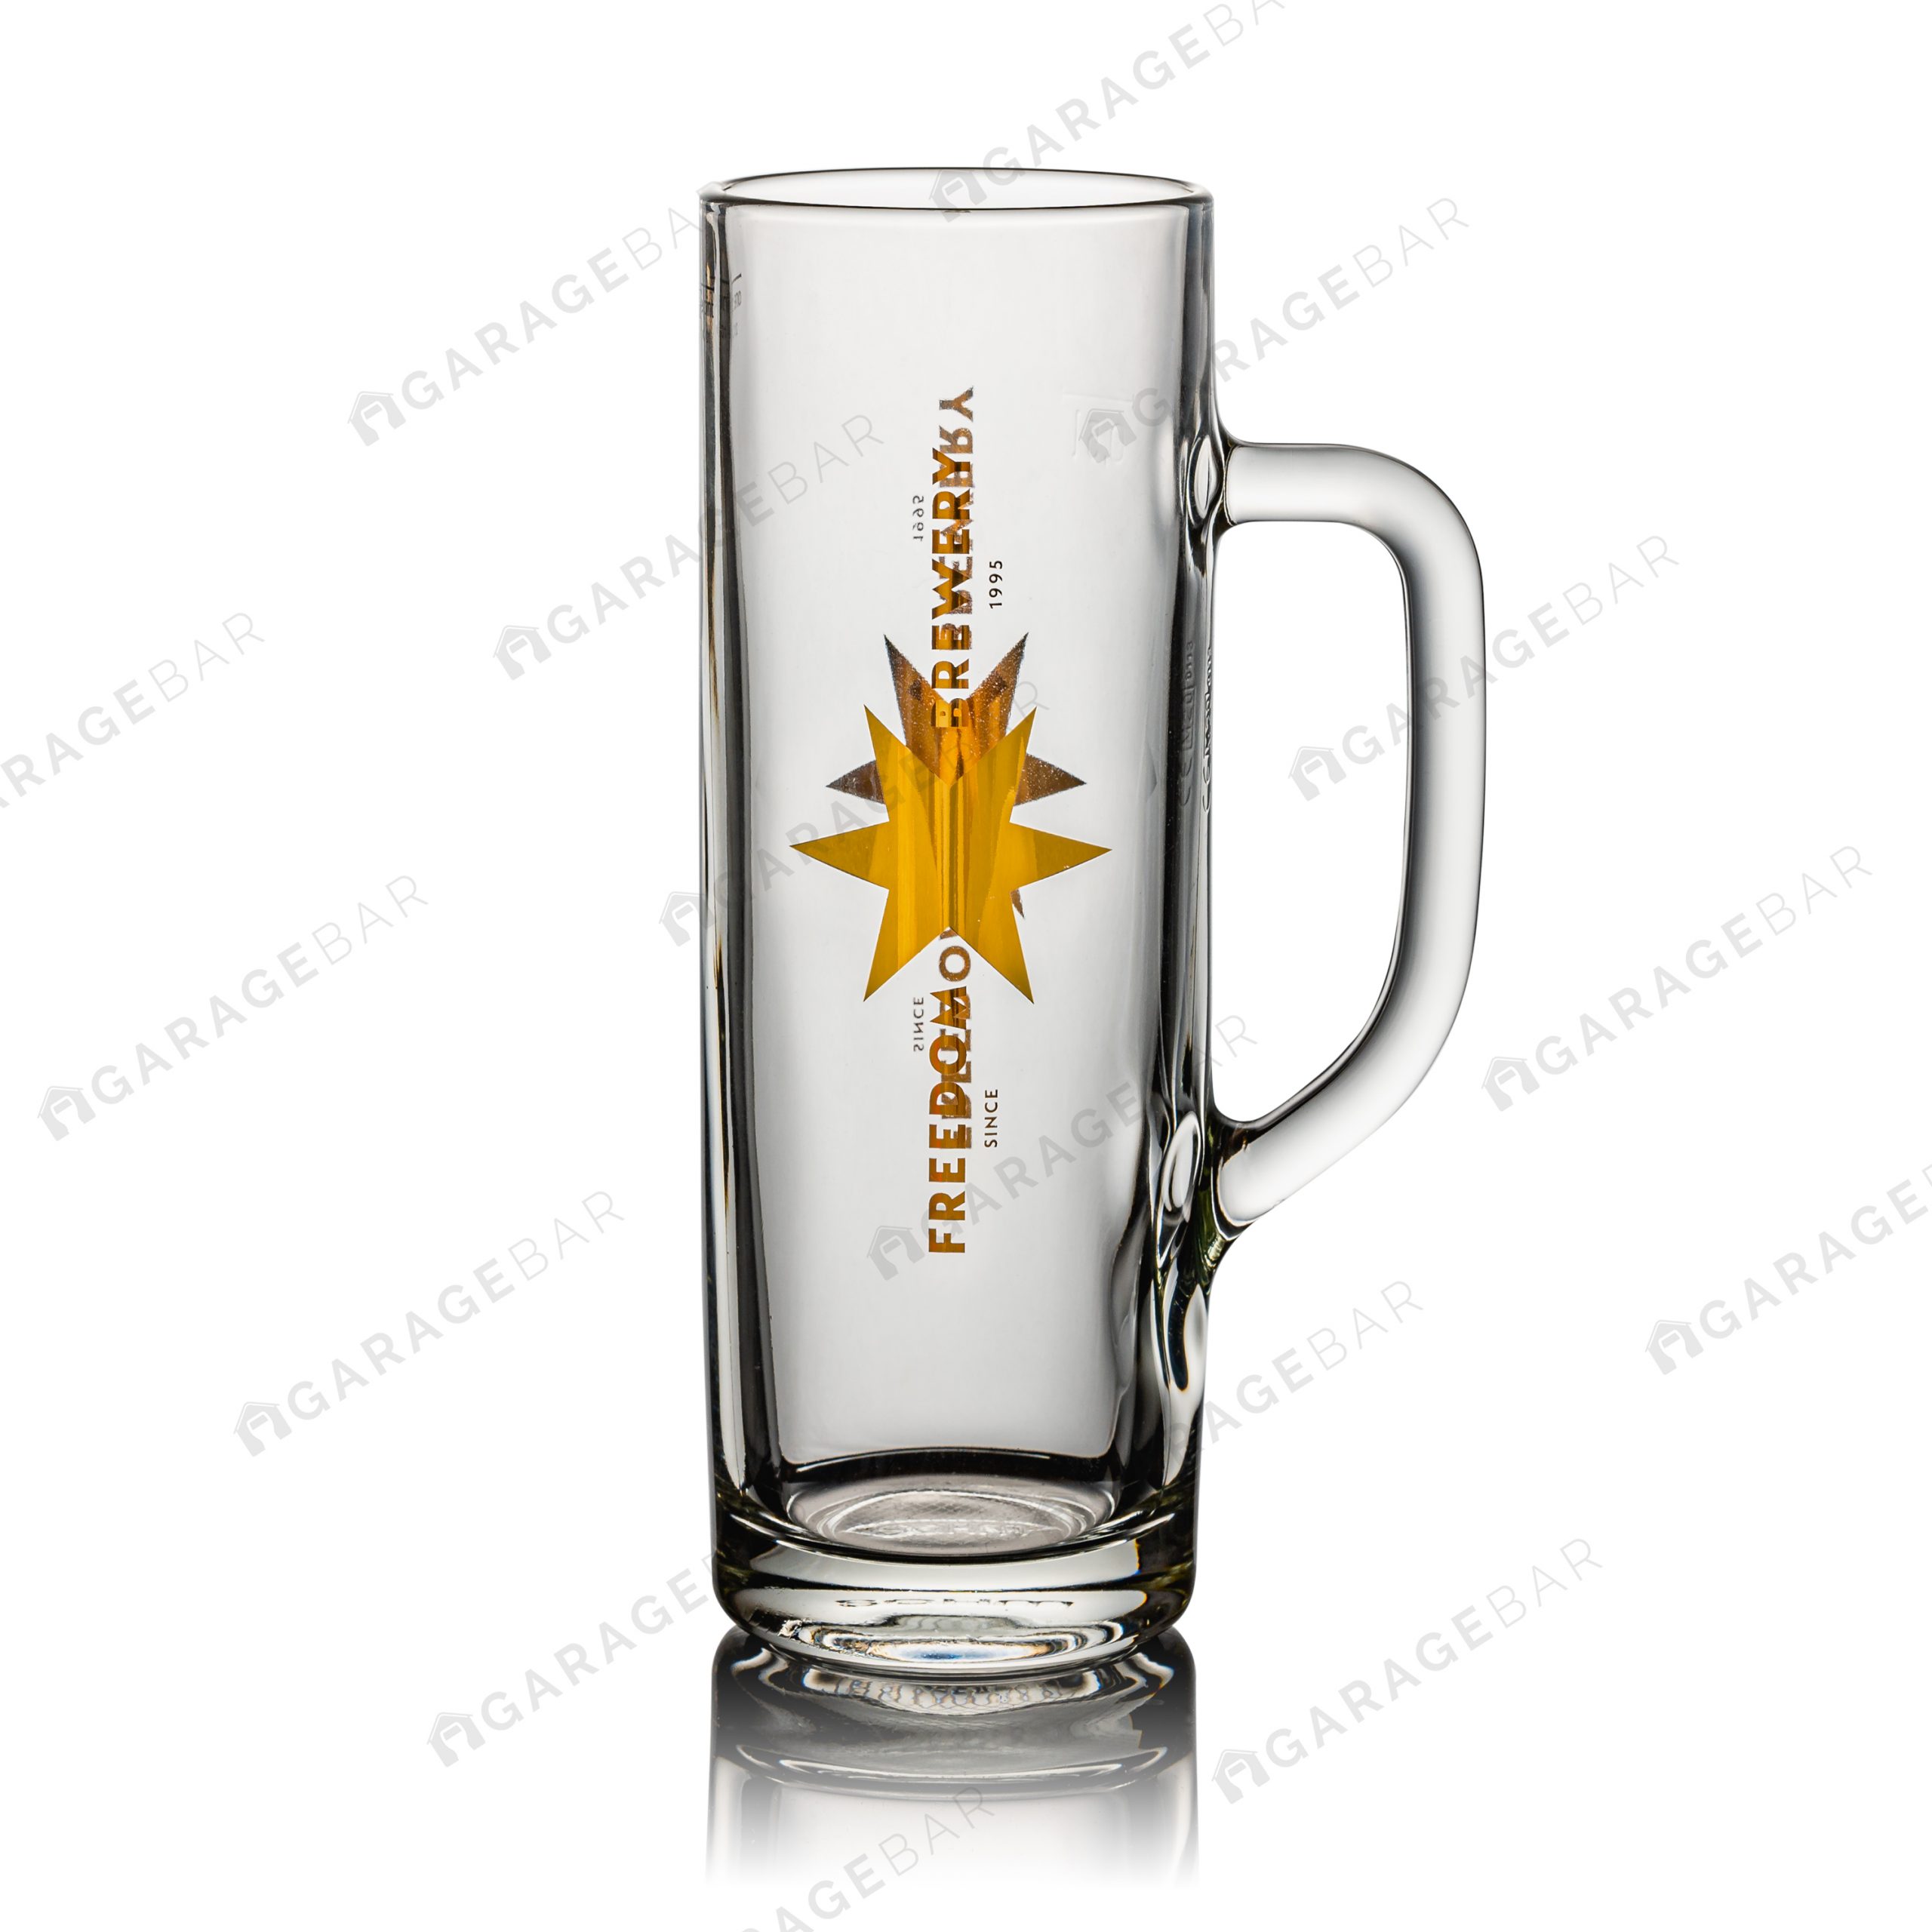 Freedom Brewery Pint Tankard Beer Glass